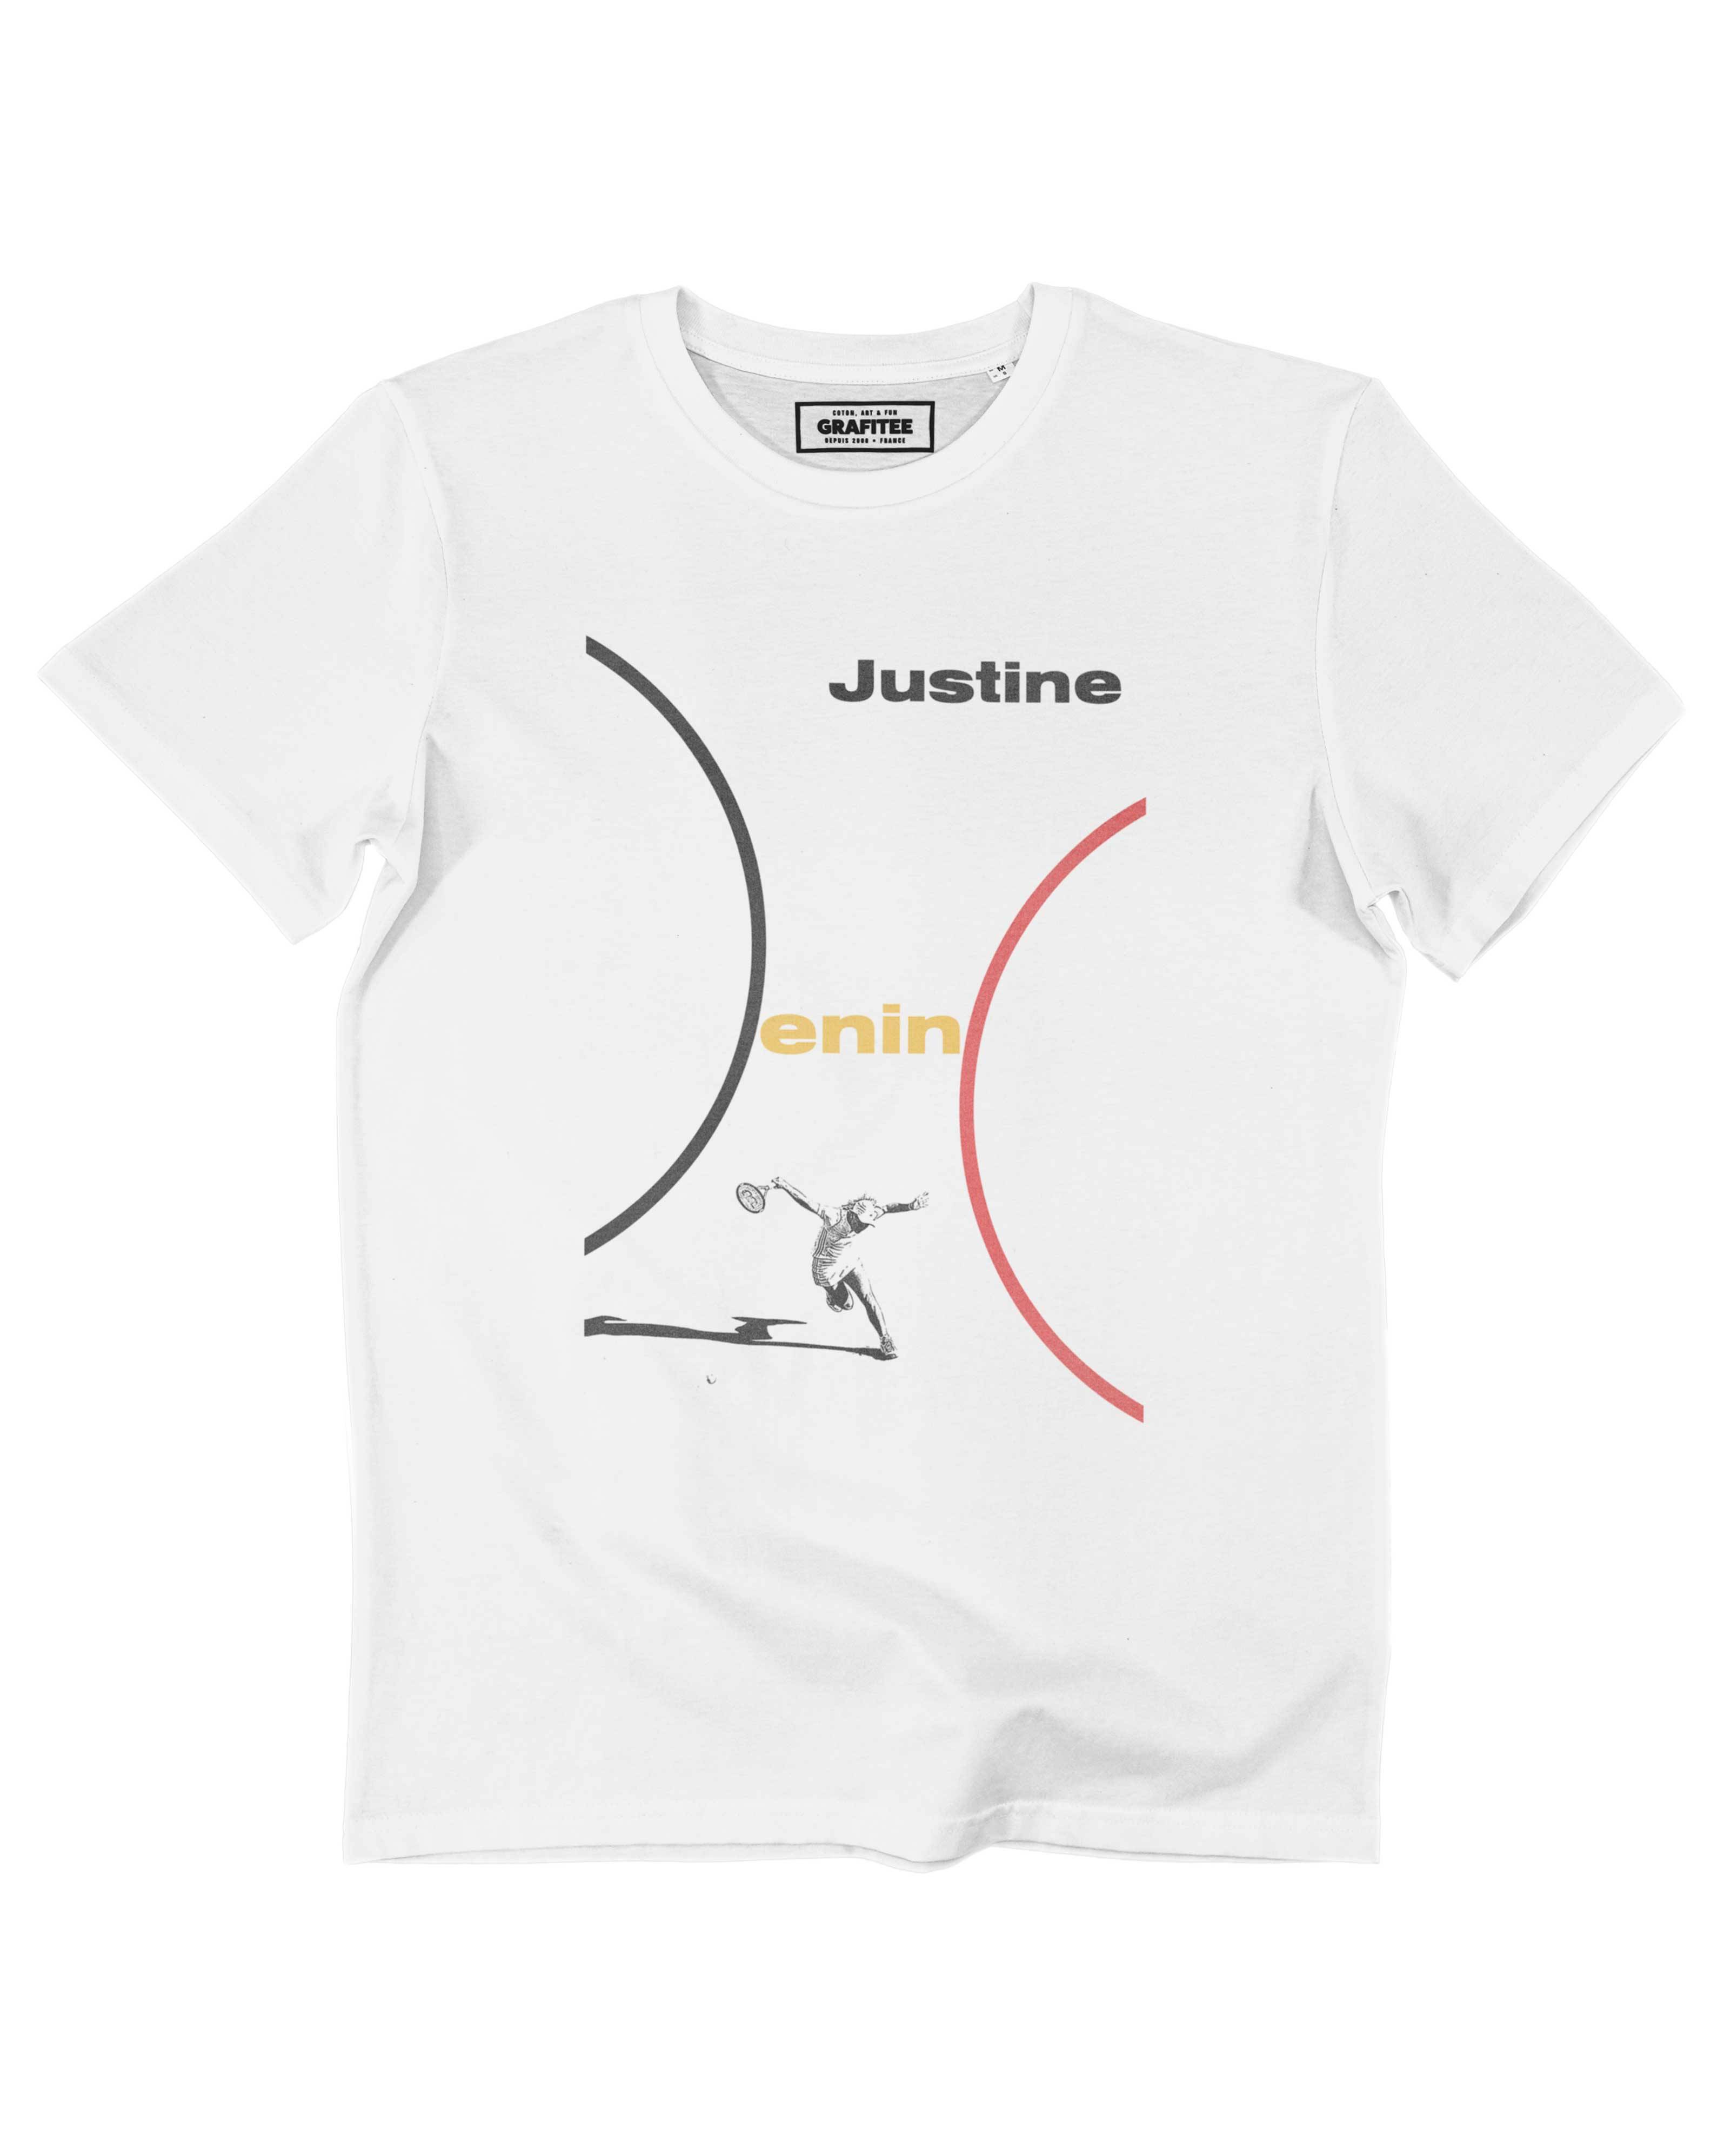 T-shirt Justine Henin Grafitee